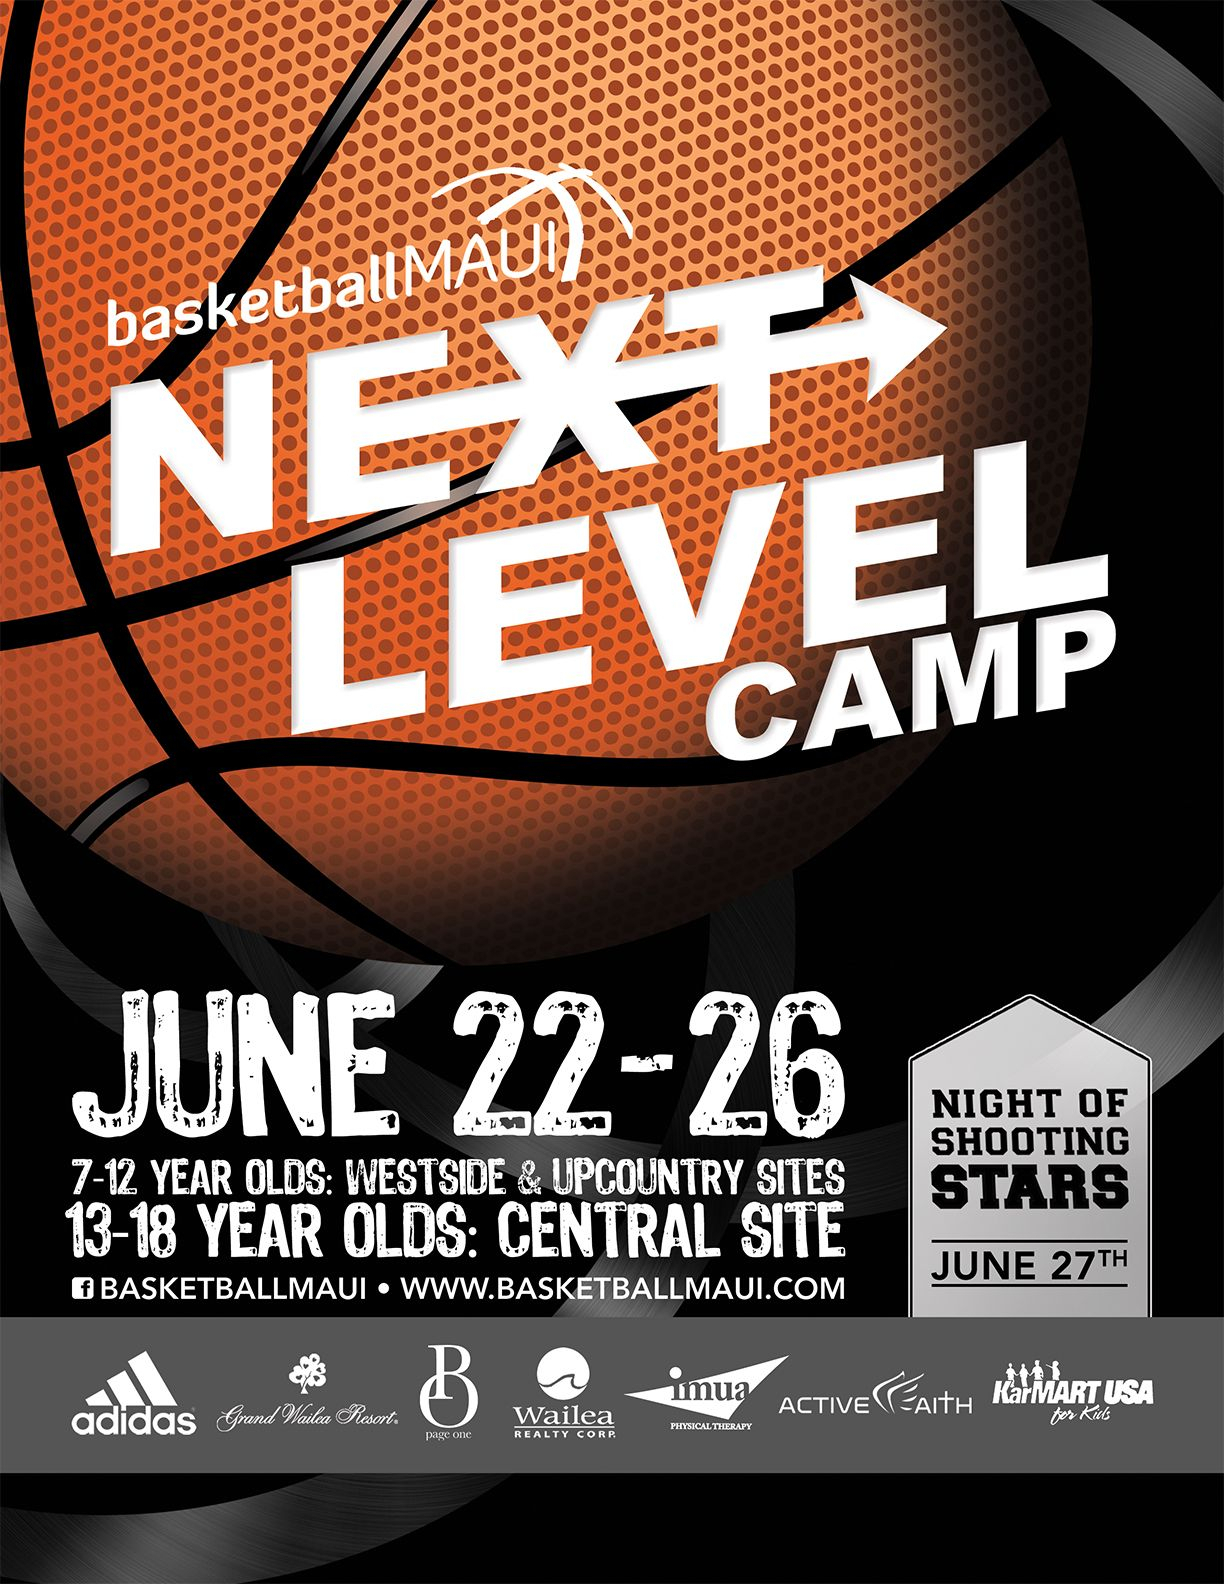 Flyer Design For Kids Basketball Camp. Designed Pertaining To Basketball Camp Brochure Template